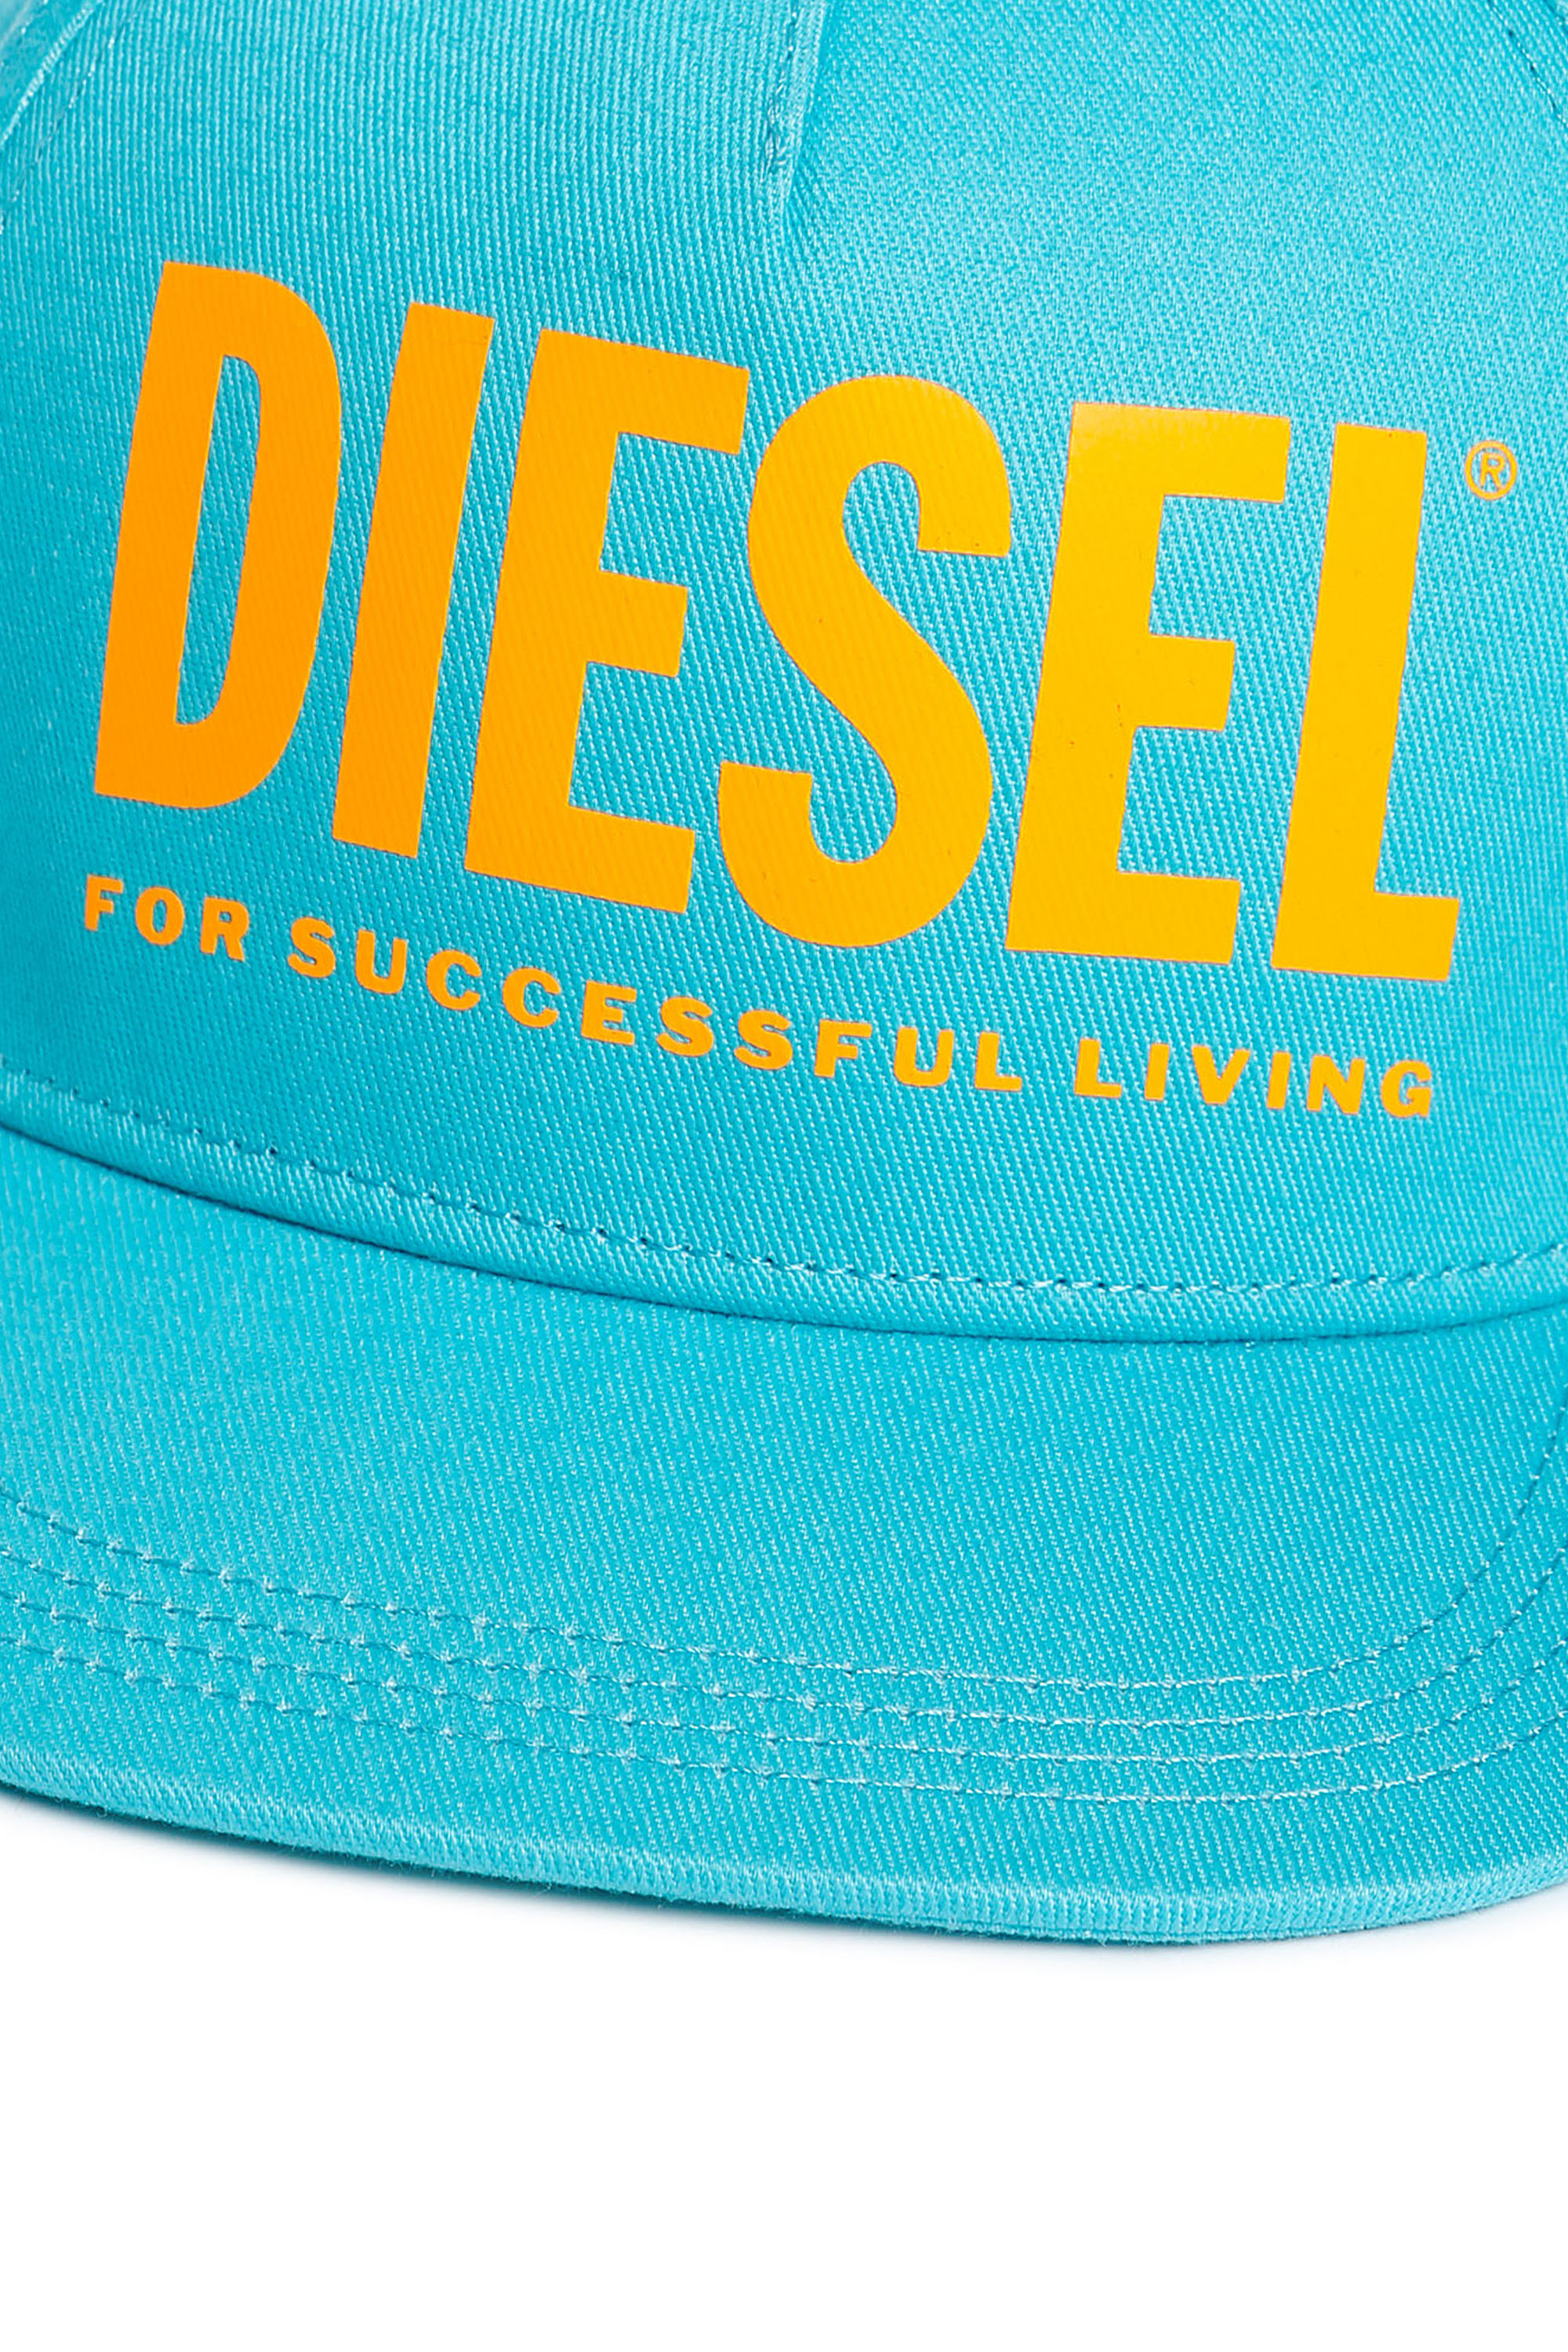 Diesel - FOLLY, Verde Acqua - Image 3